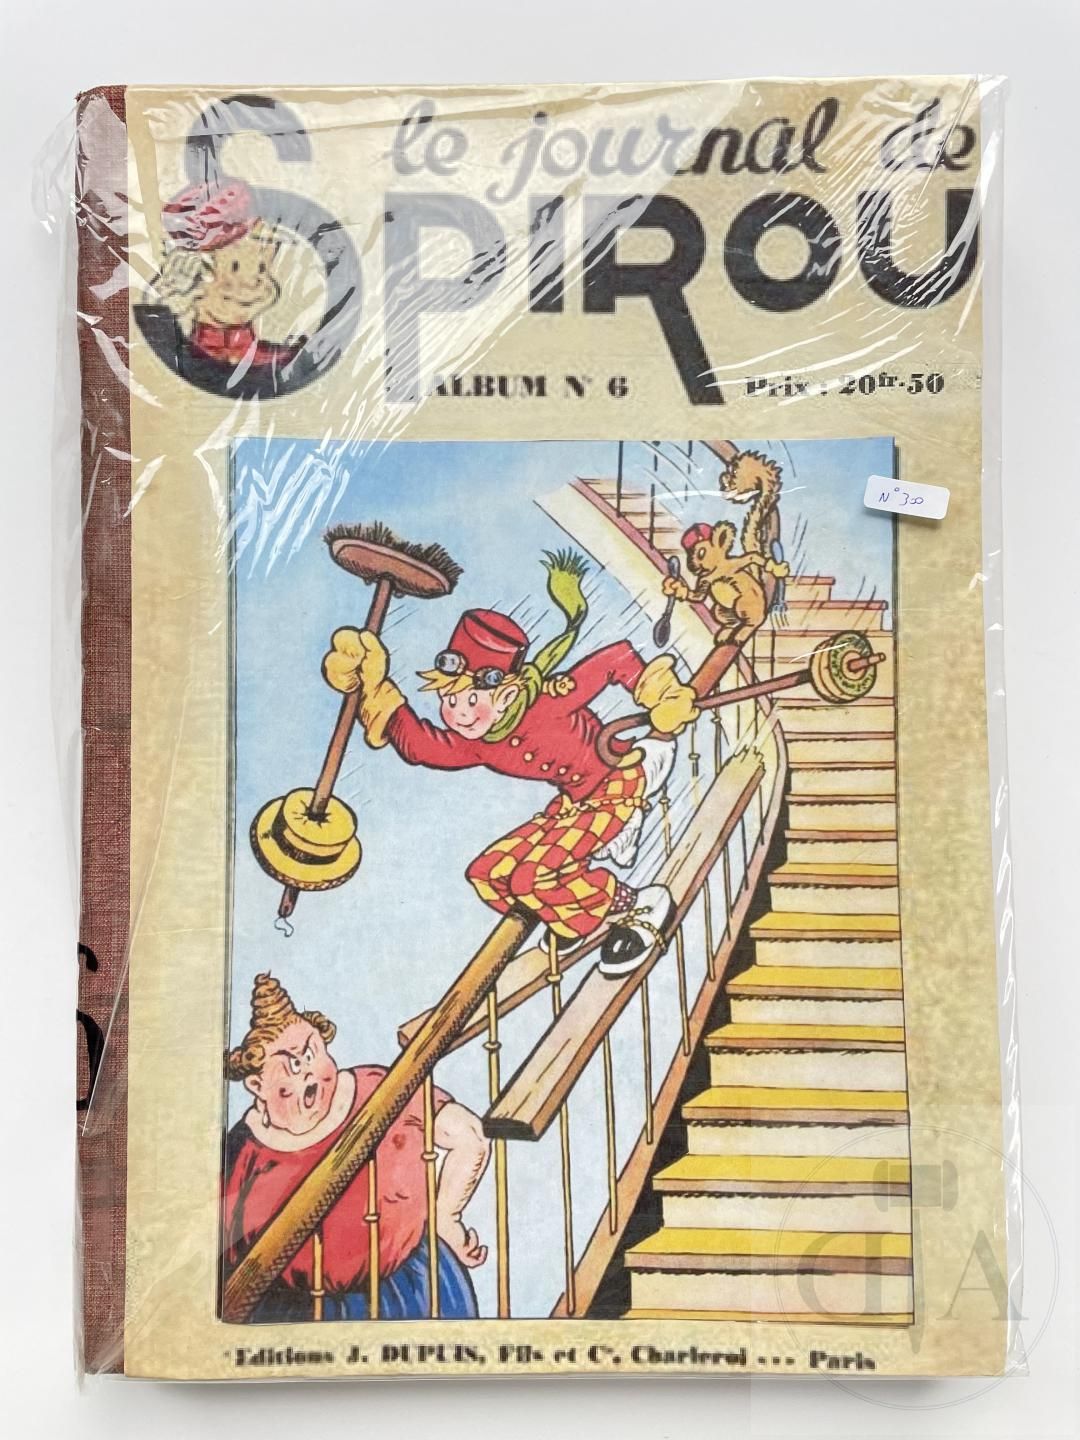 Null Le journal de Spirou/Reliure editeur n°6 de 1940. Completo en buen estado. &hellip;